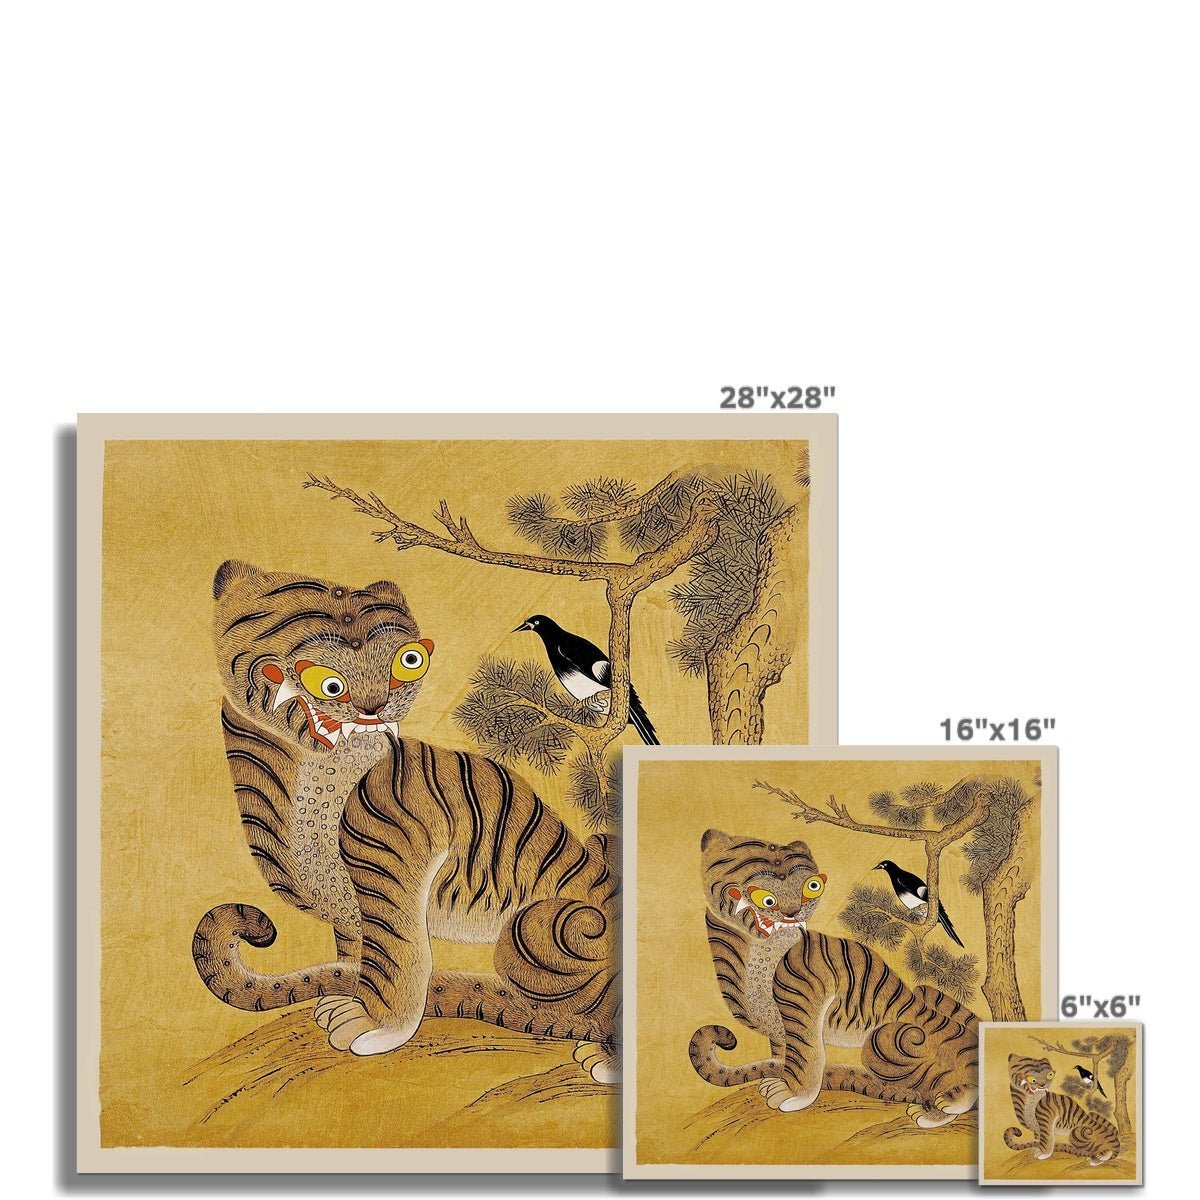 giclee 6"x6" Minhwa Tiger and Magpie: Classic Korean 19th-Century Folk Painting Antique Bird Jungle Kawaii Wildlife Lion Leopard Poster Fine Art Print